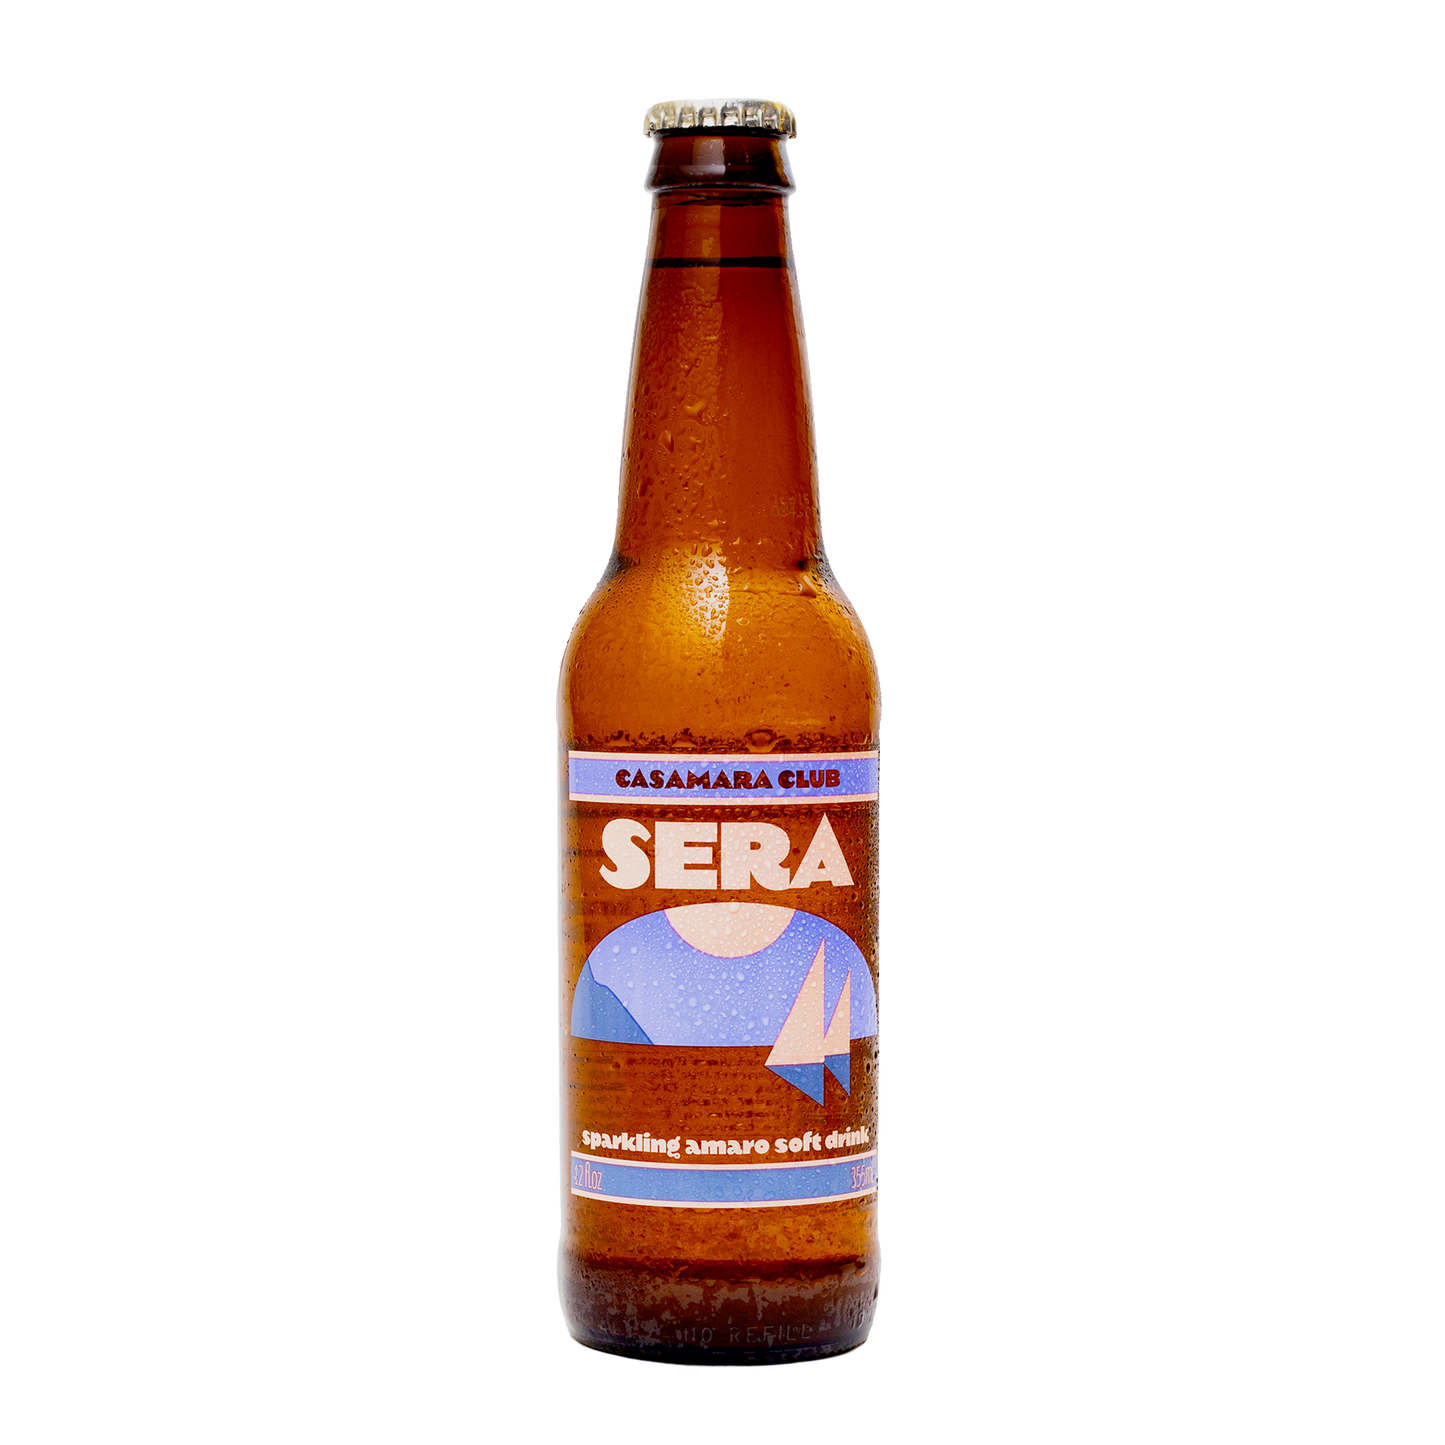 Sera bottles, apero spritz — Riviera style botanical soda